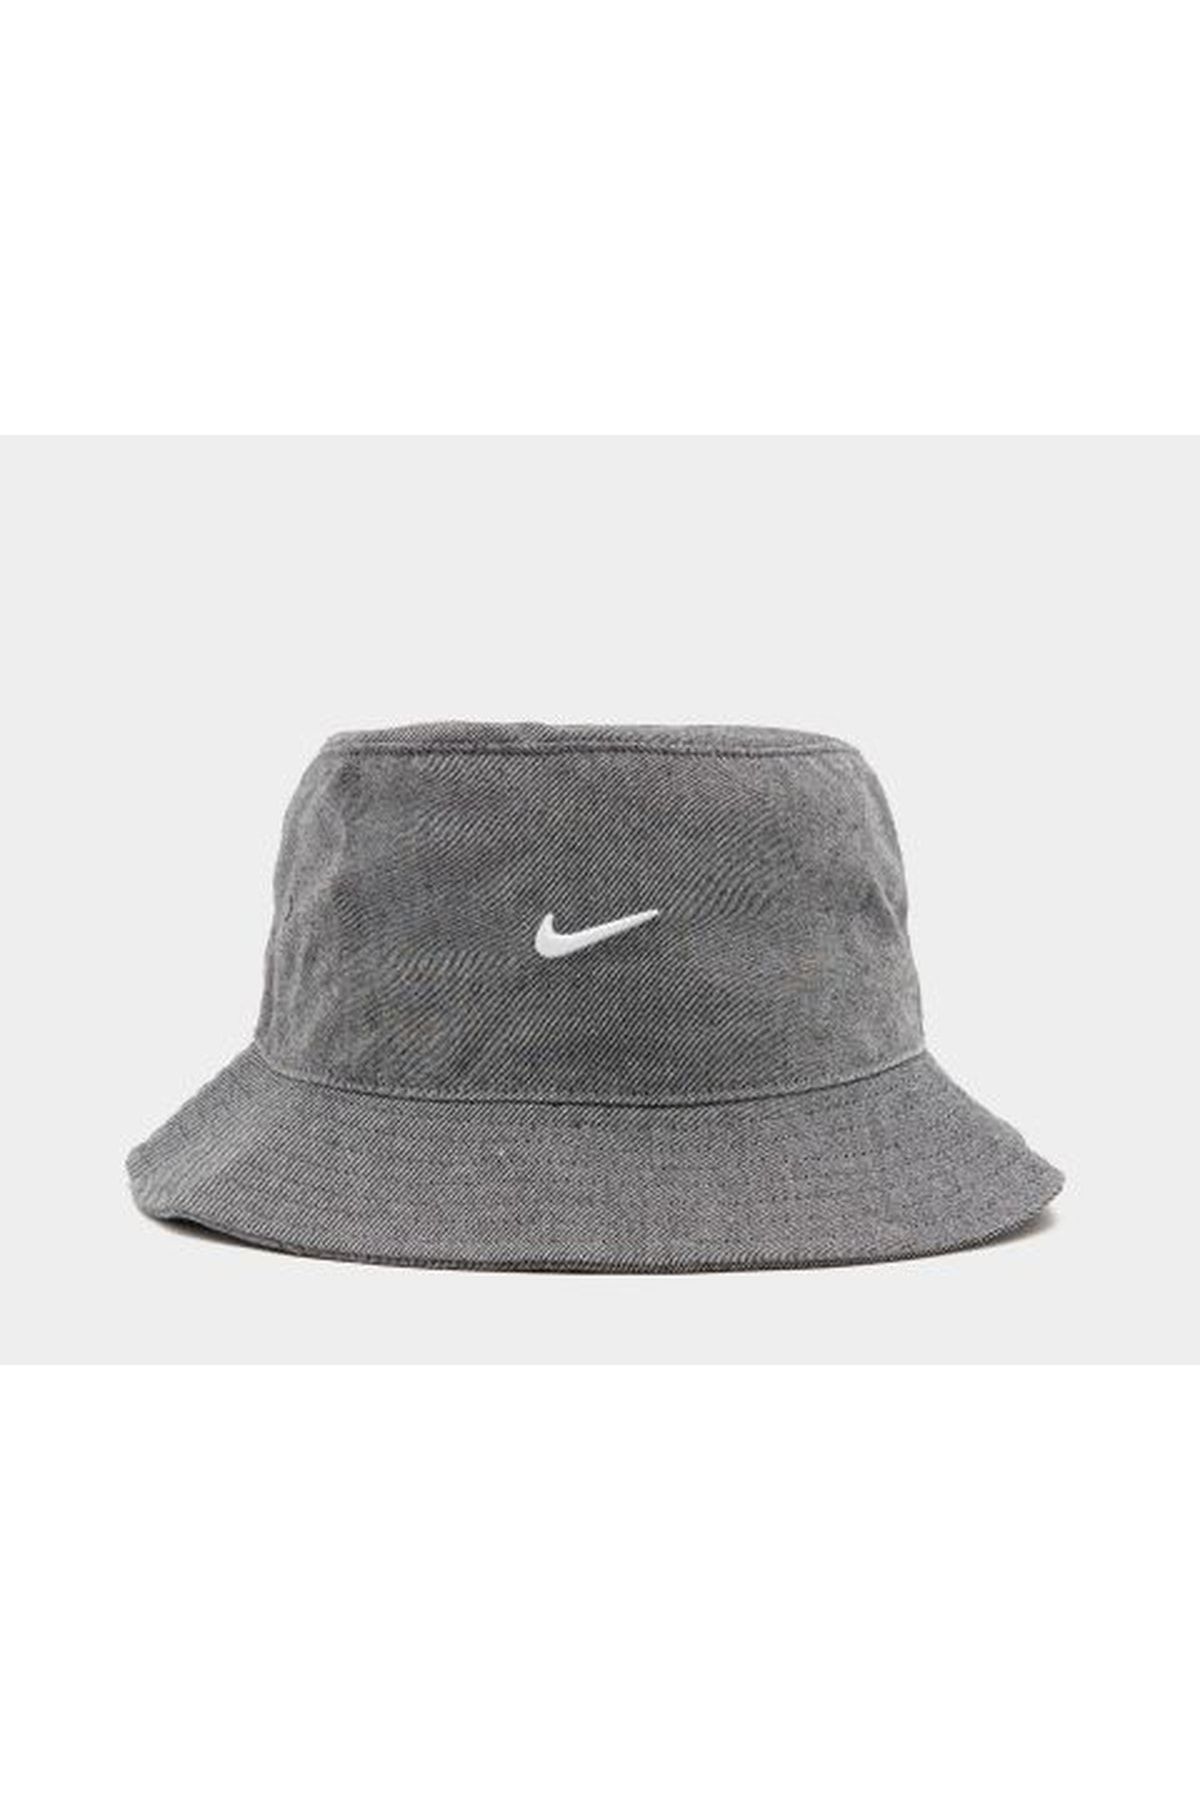 Nike Nsw Bucket Hat Black Striped Dv5635-010